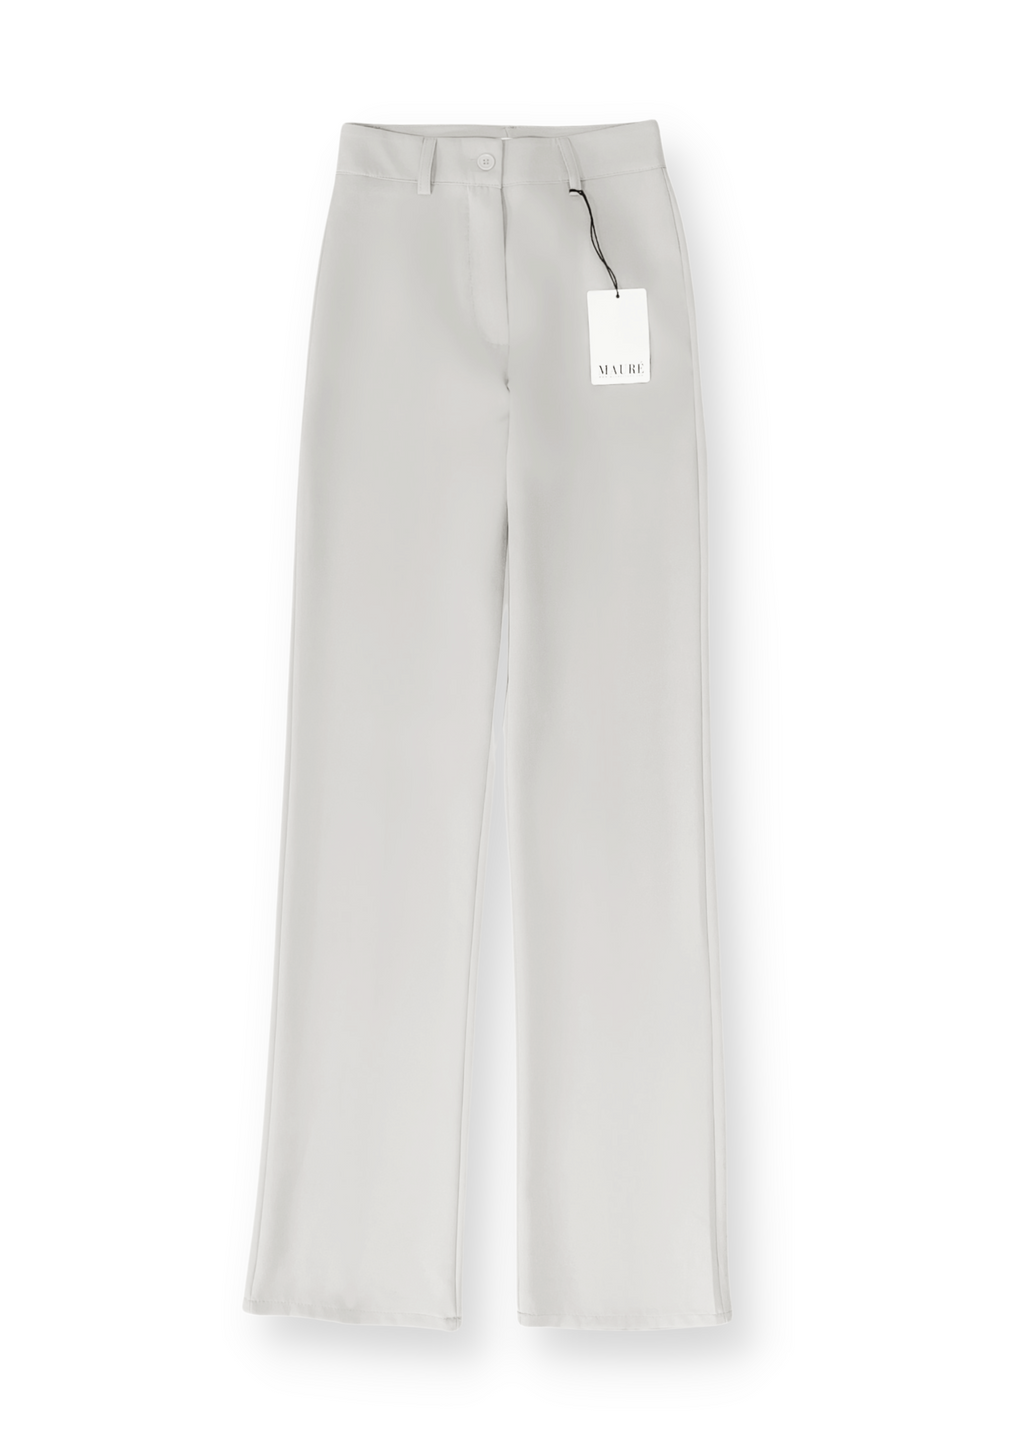 Straight leg pants classic creamy gray (REGULAR) - Mauré